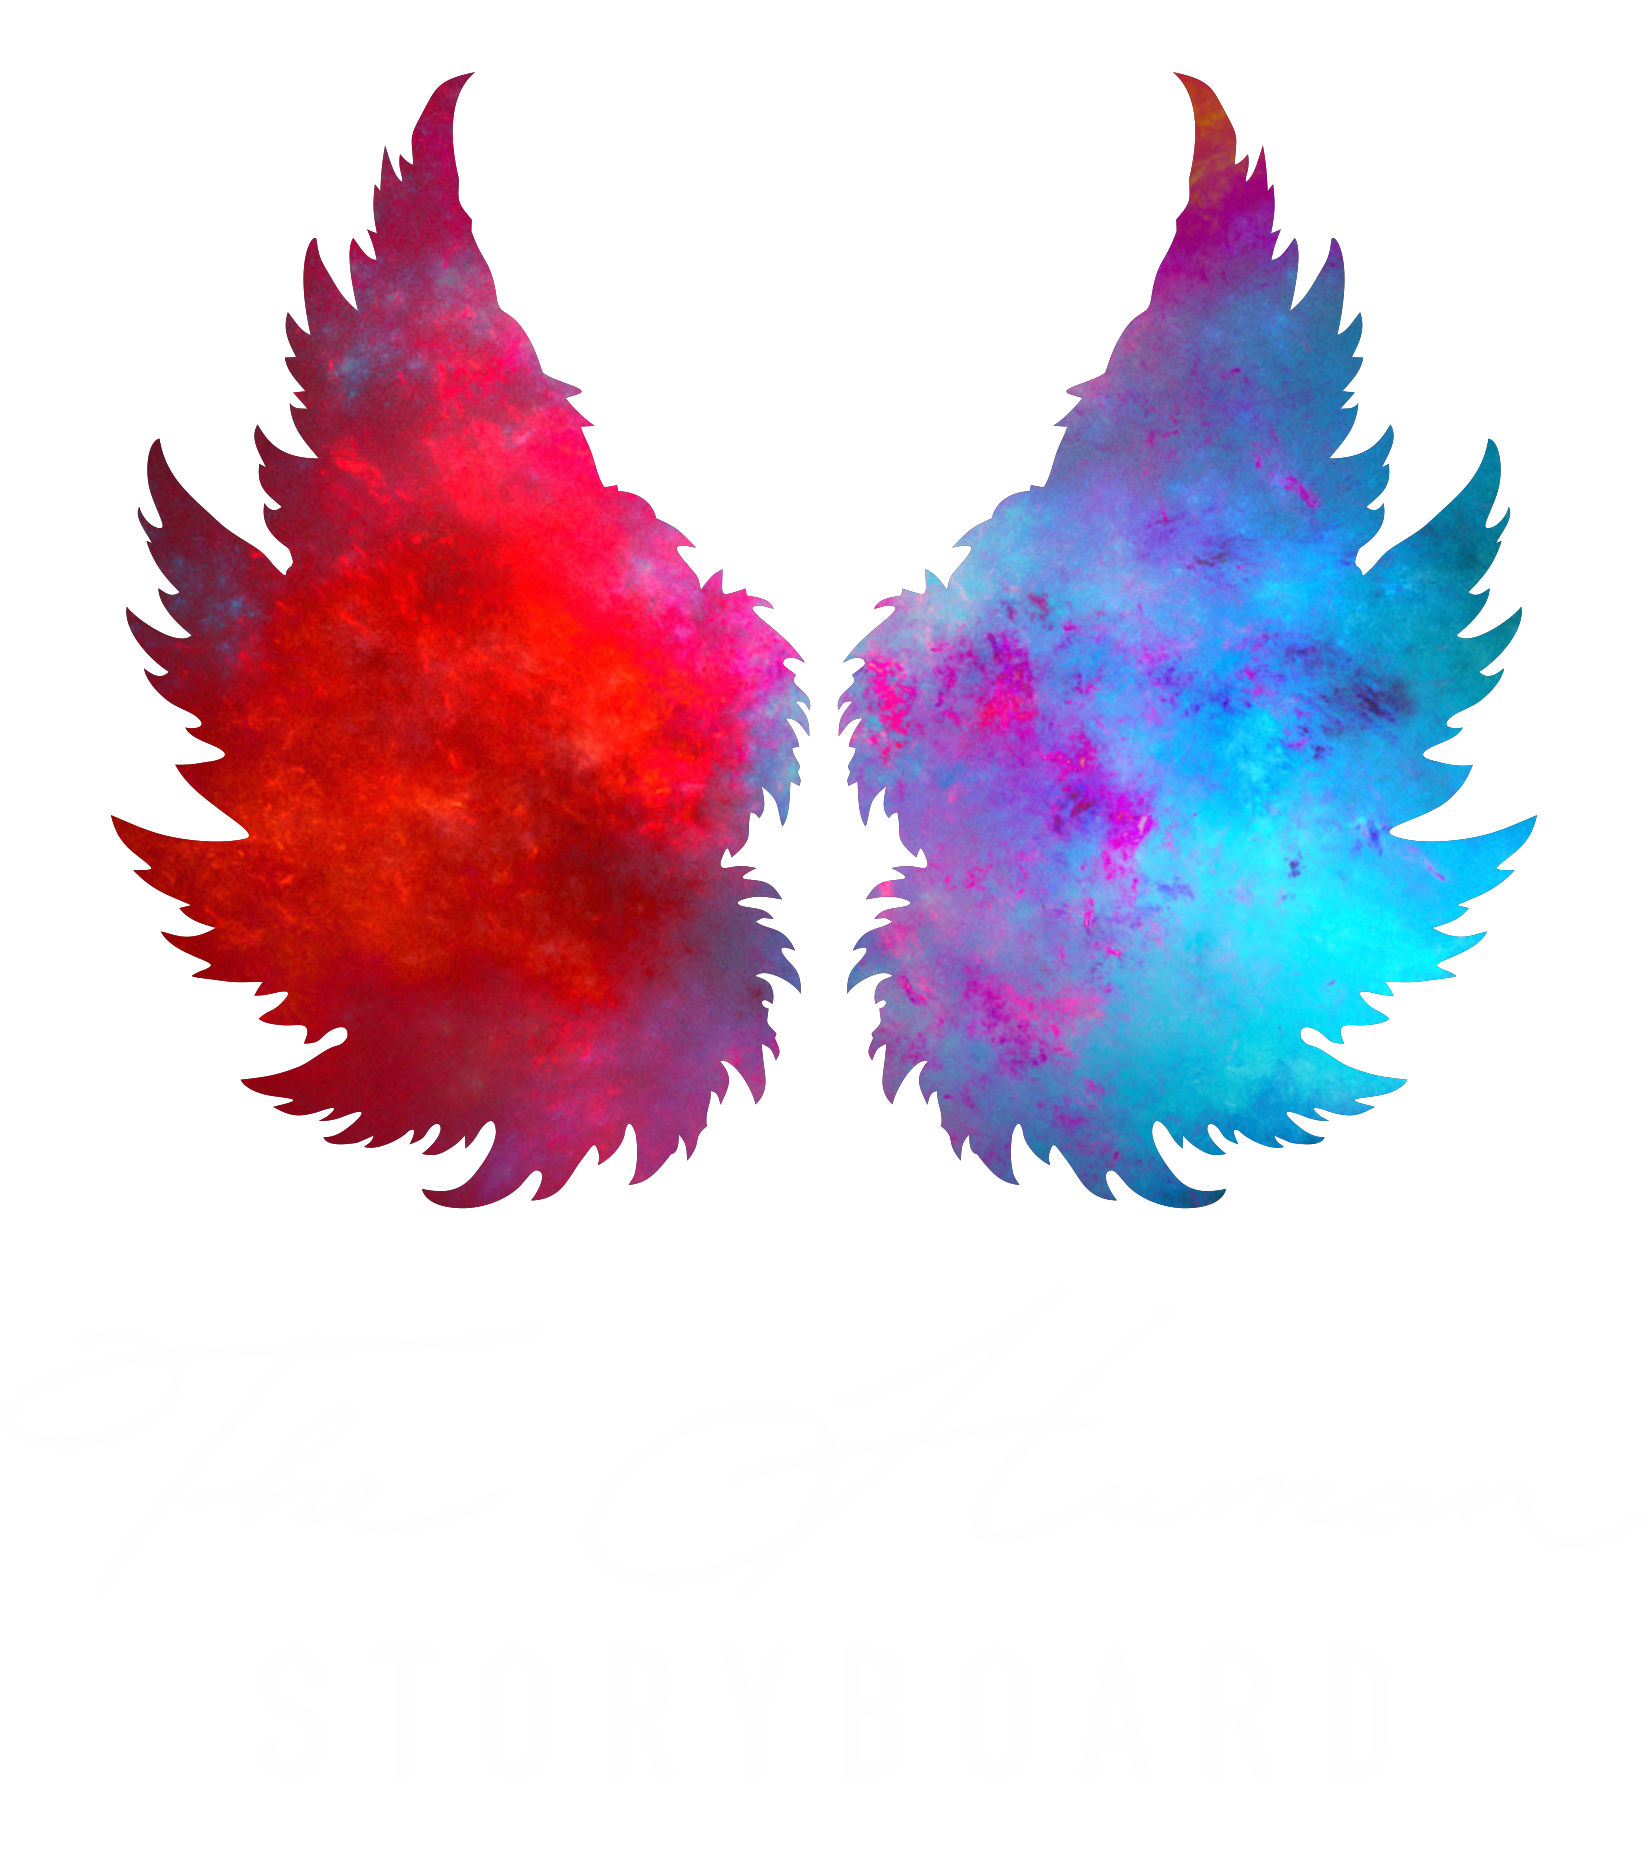 The Human Storyboard